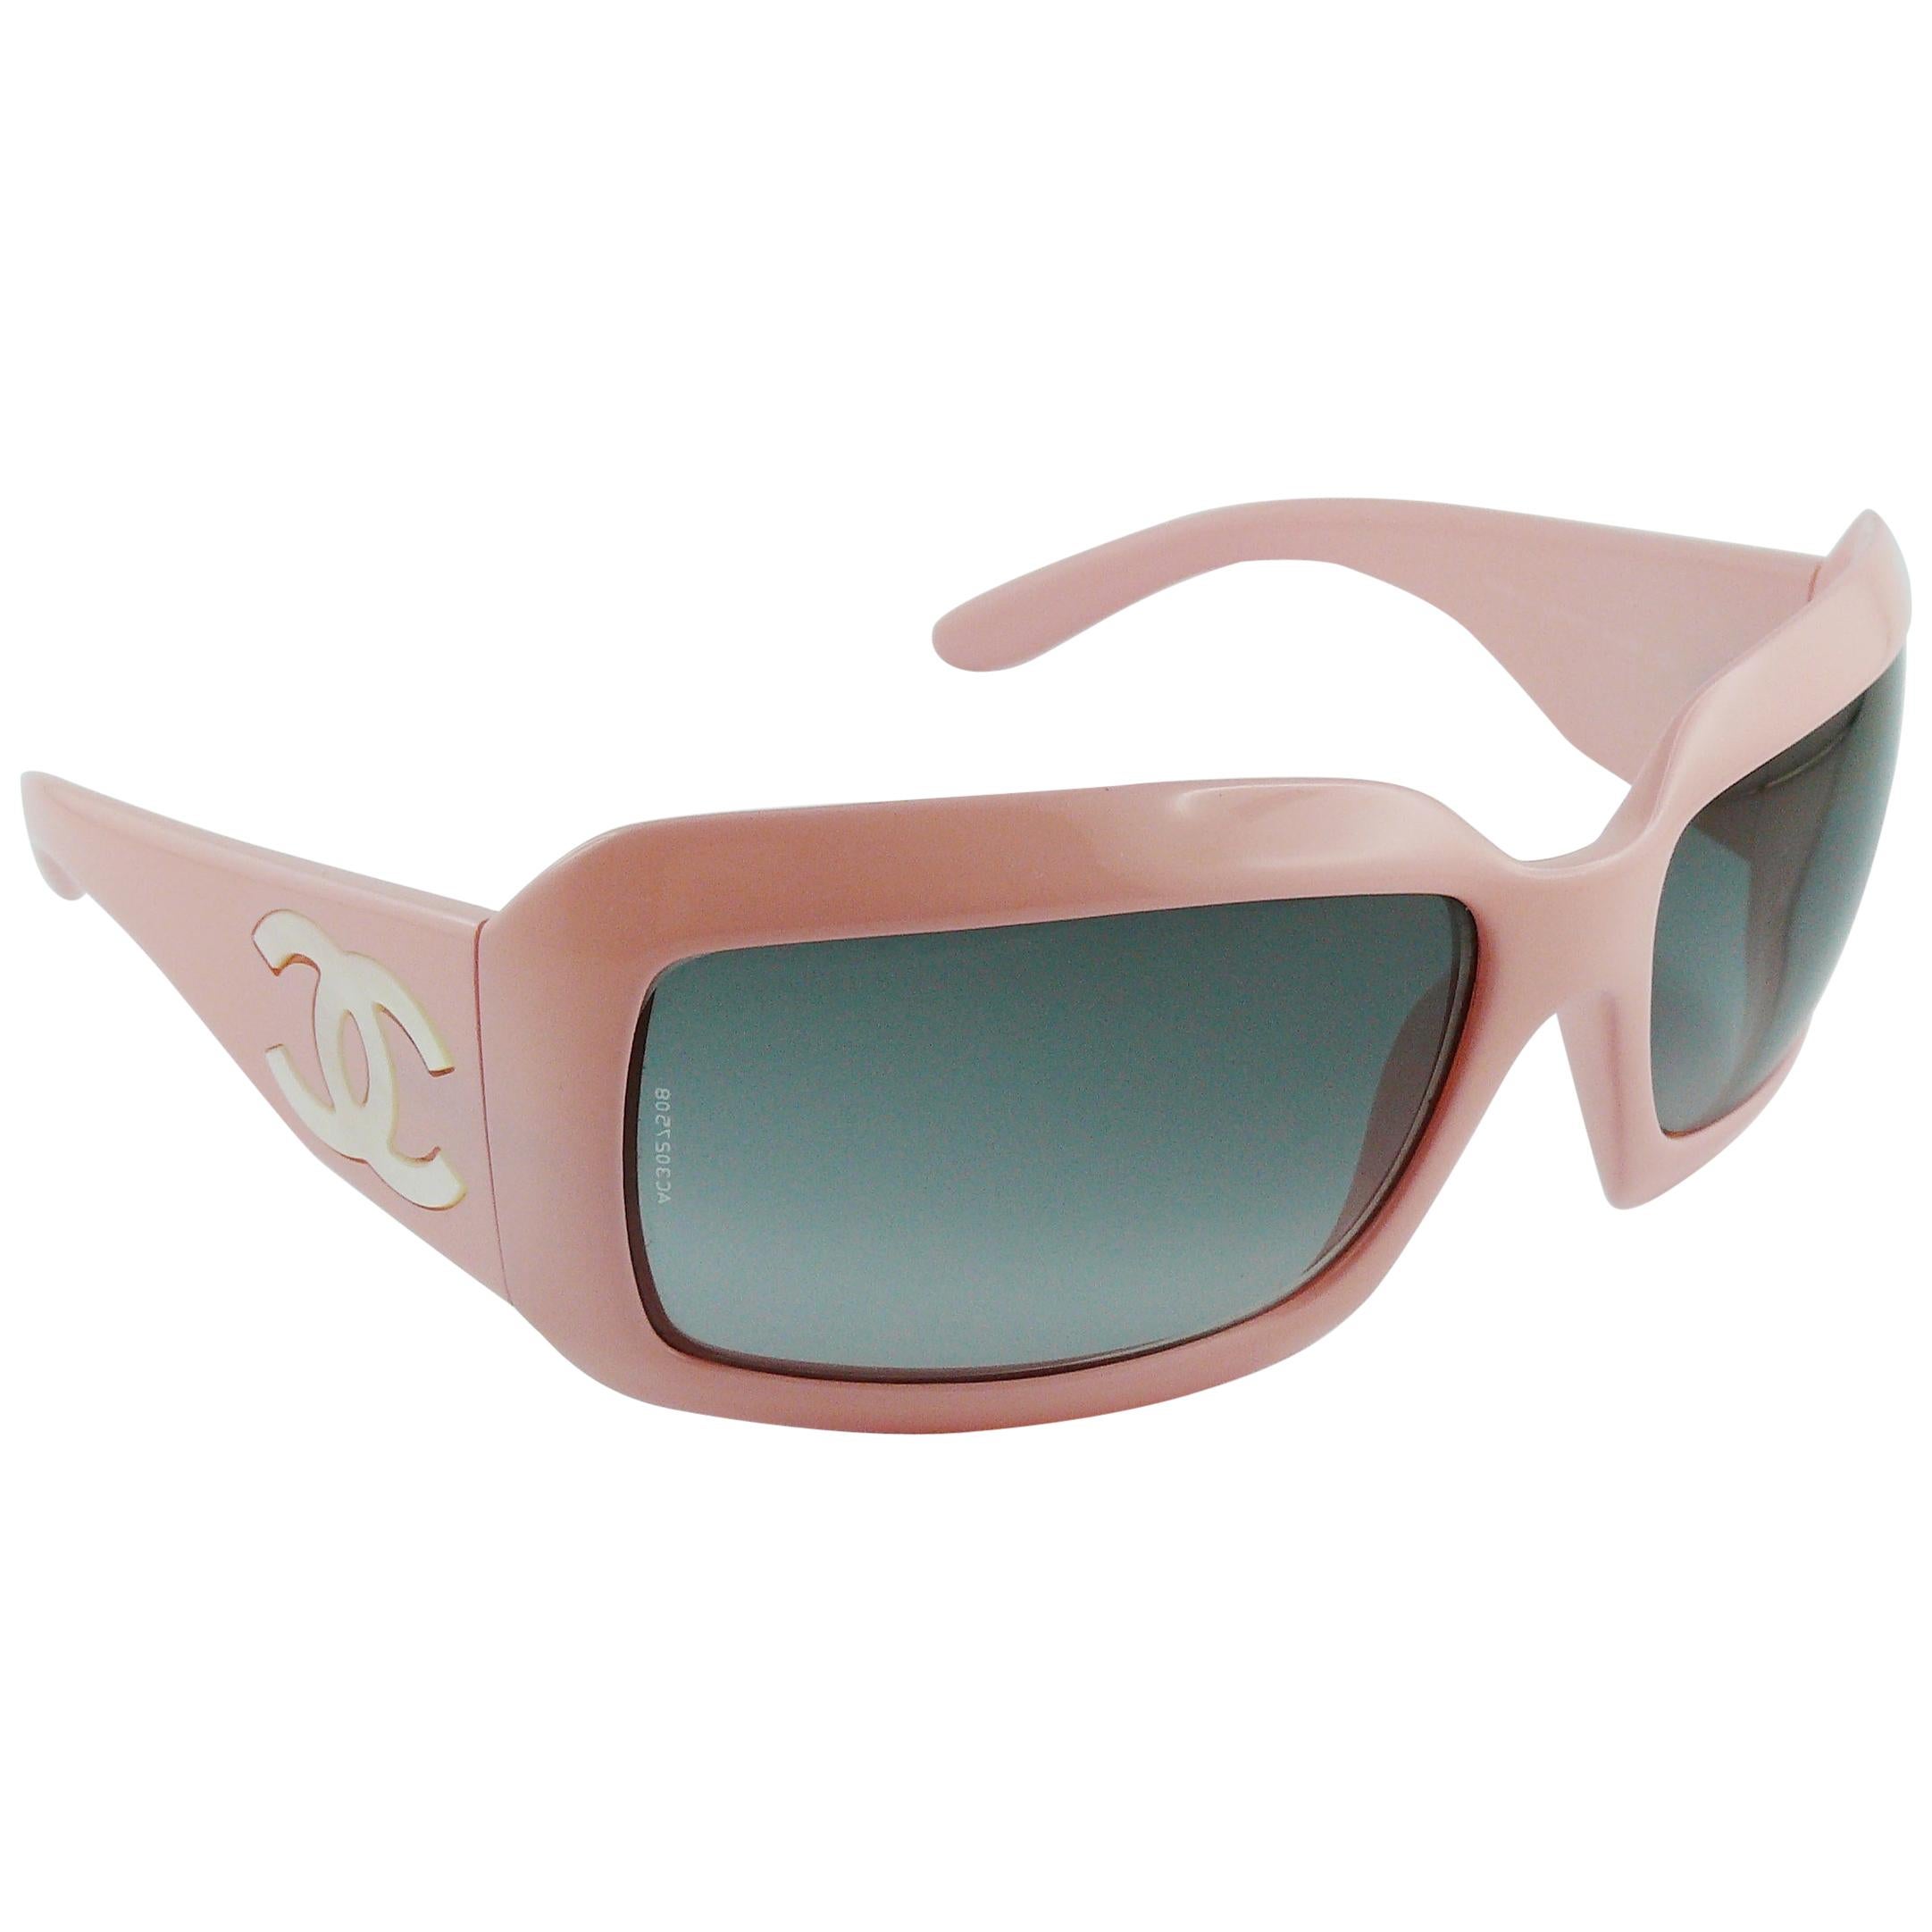 baby pink sunglasses